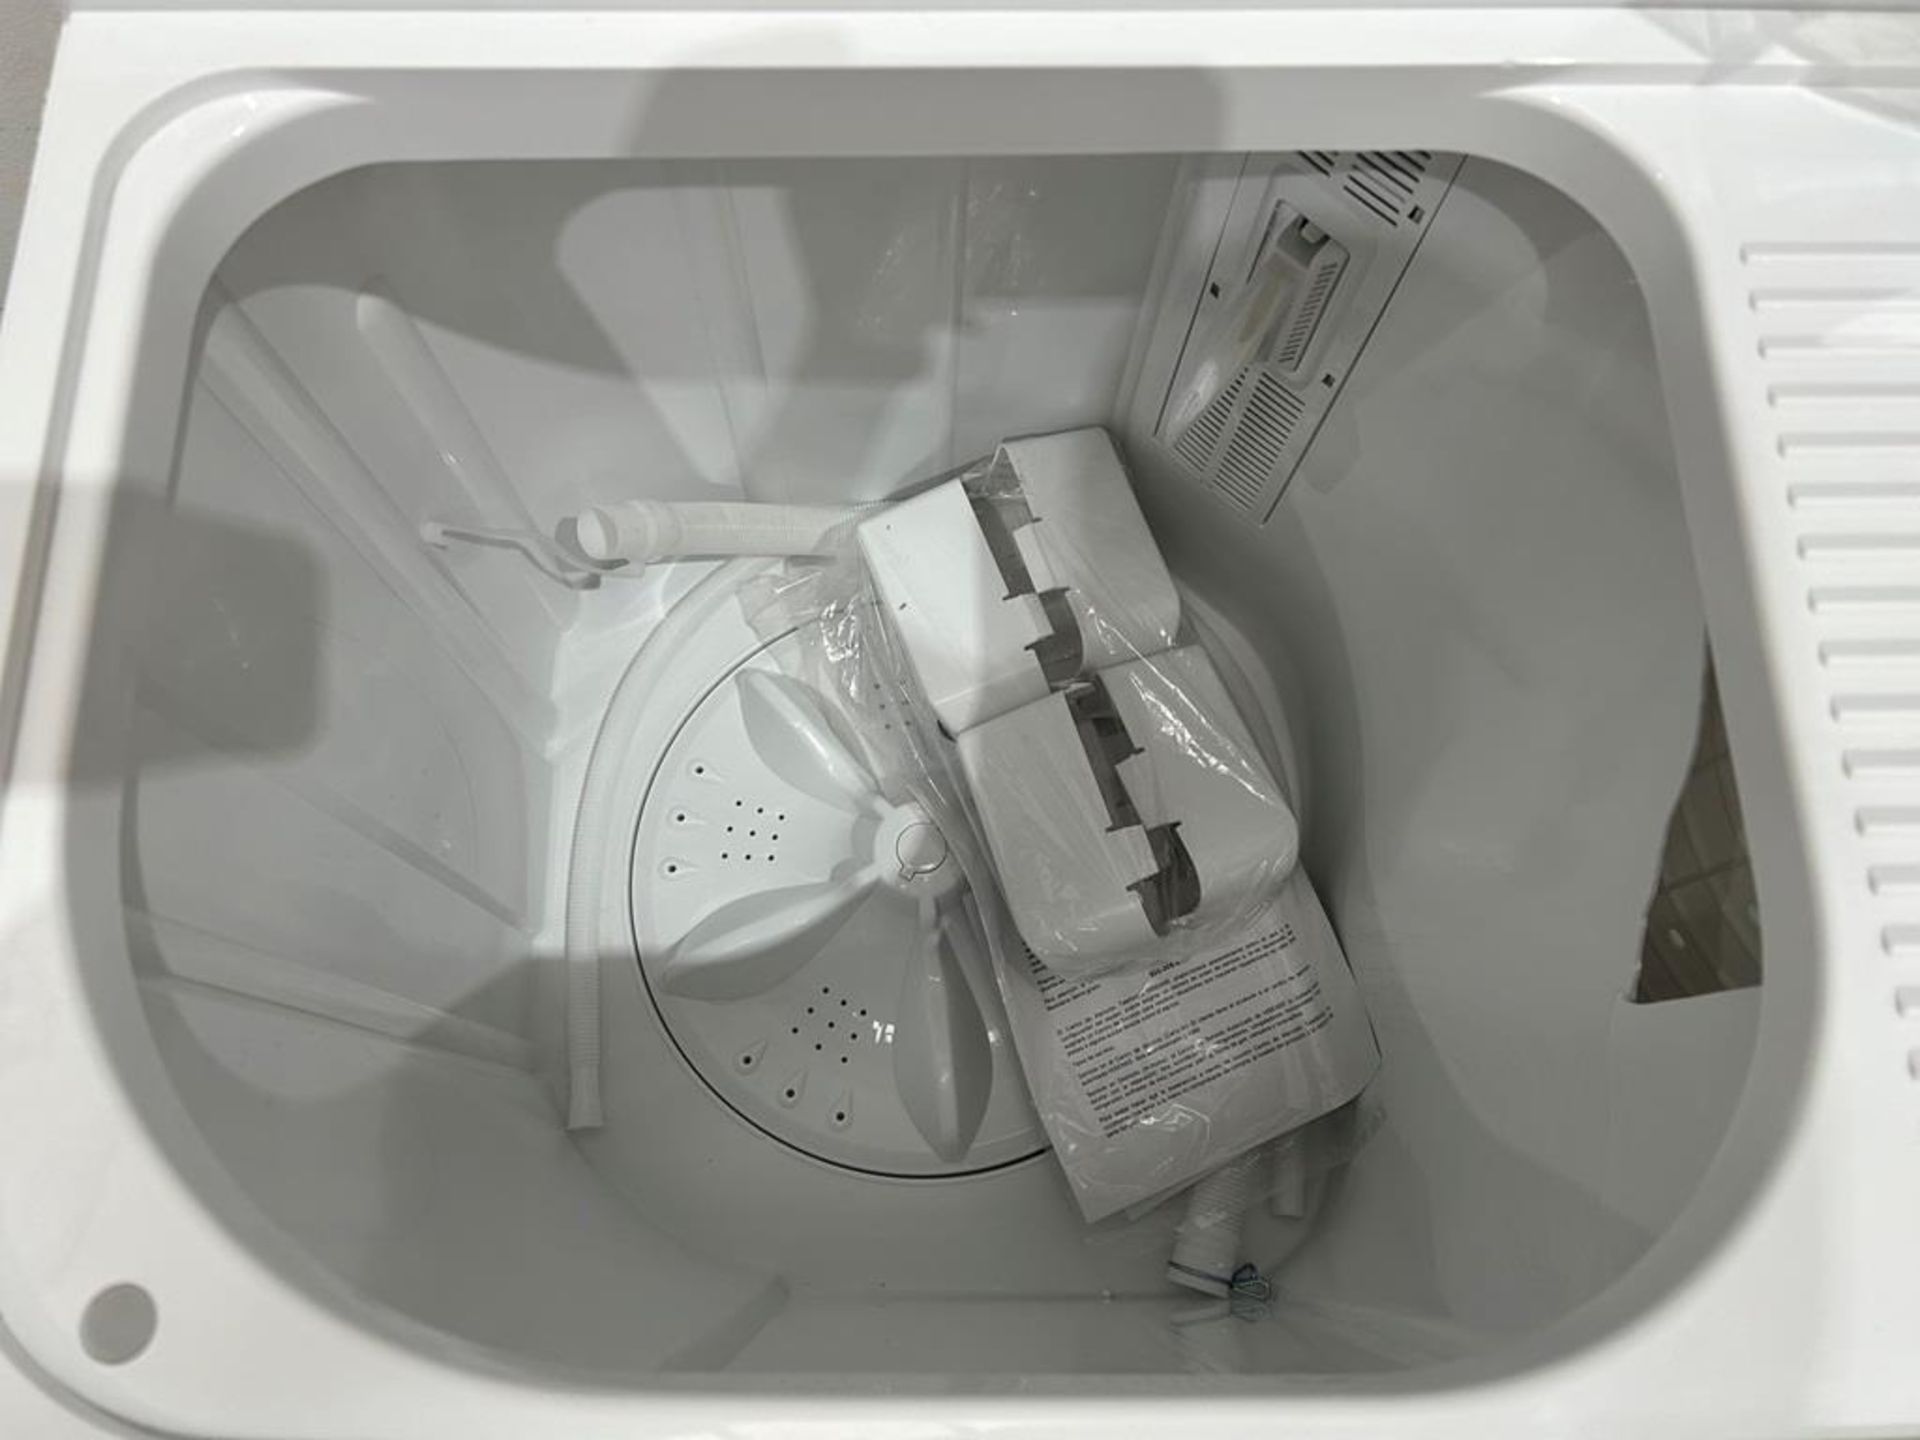 Lote de 2 lavadoras contiene: 1 Lavadora de 18 KG Marca HISENSE, Modelo WSA1801P, Serie 220342, Col - Image 7 of 12